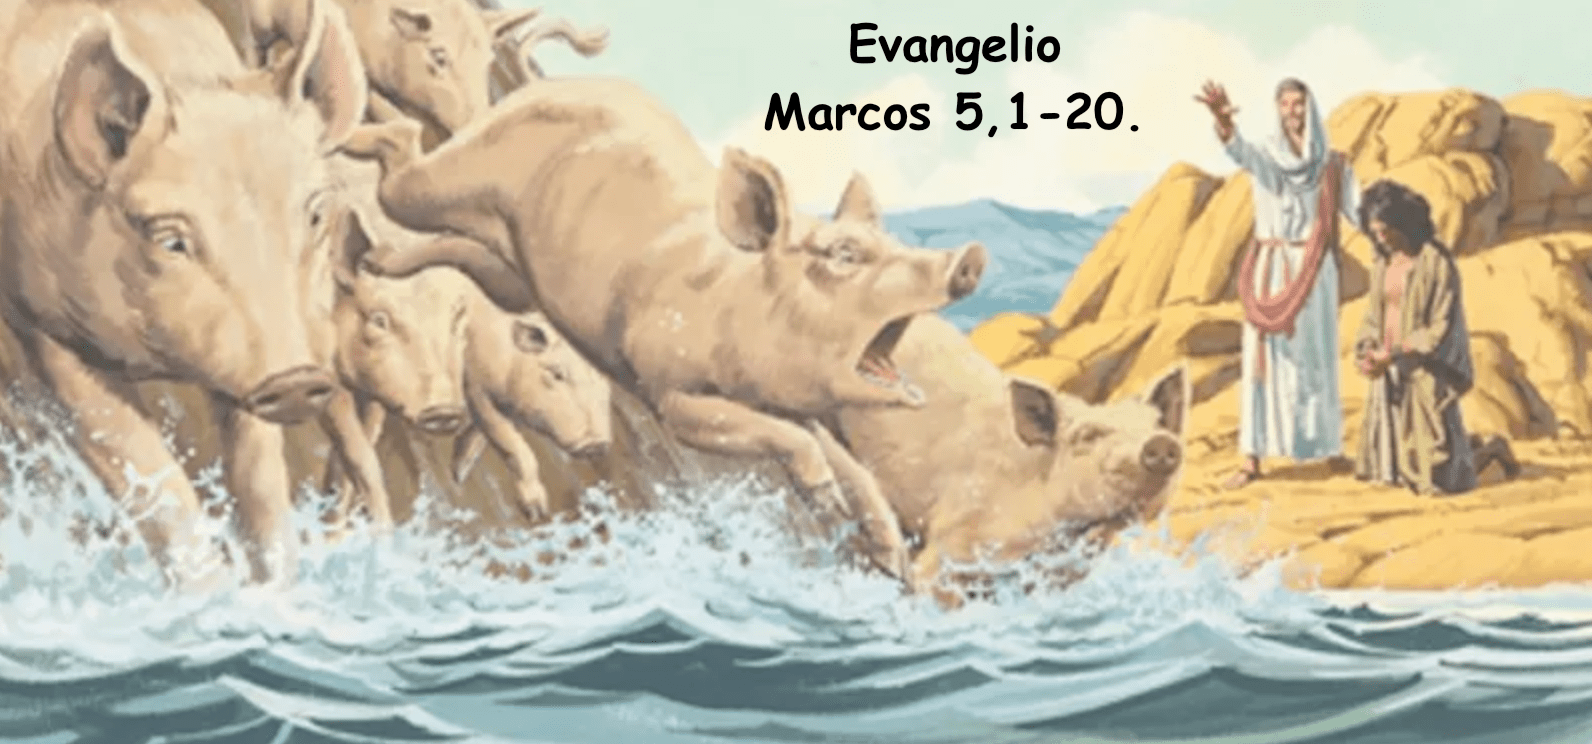 Evangelio según San Marcos 5,1-20.